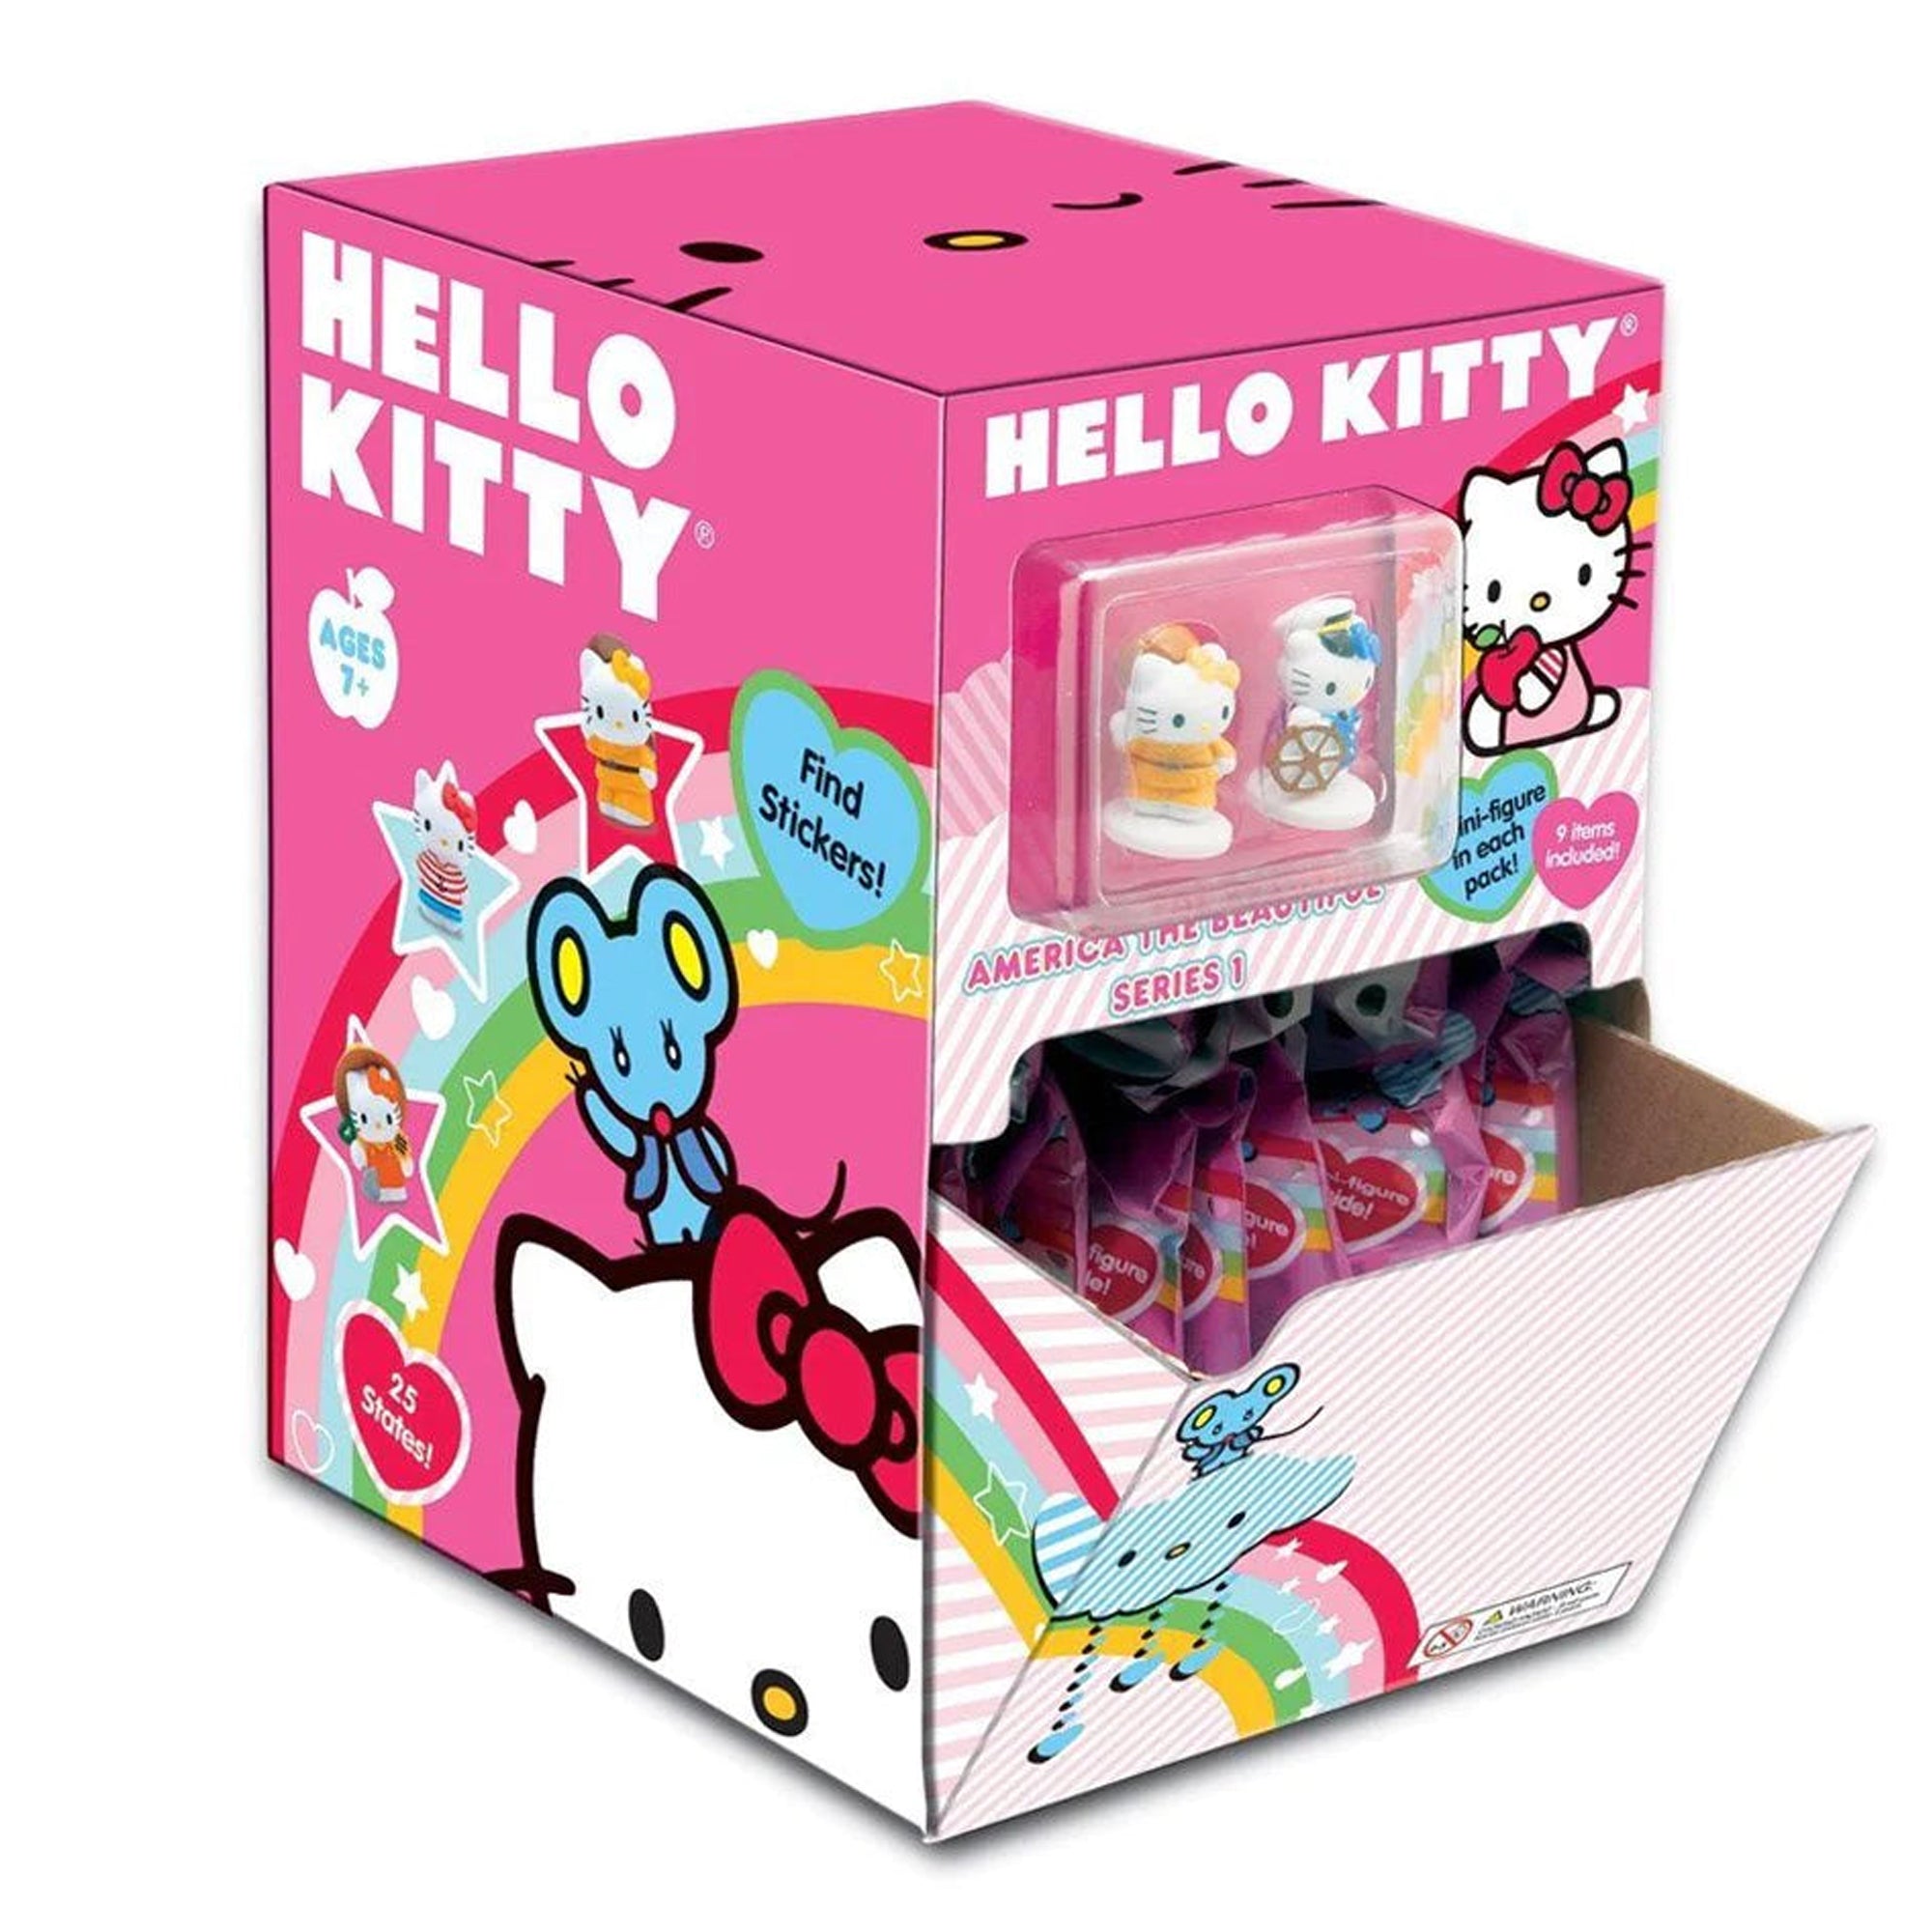 Hello kitty Small Dog pajamas New w/o tags Sanrio Pink Small SWEET THING